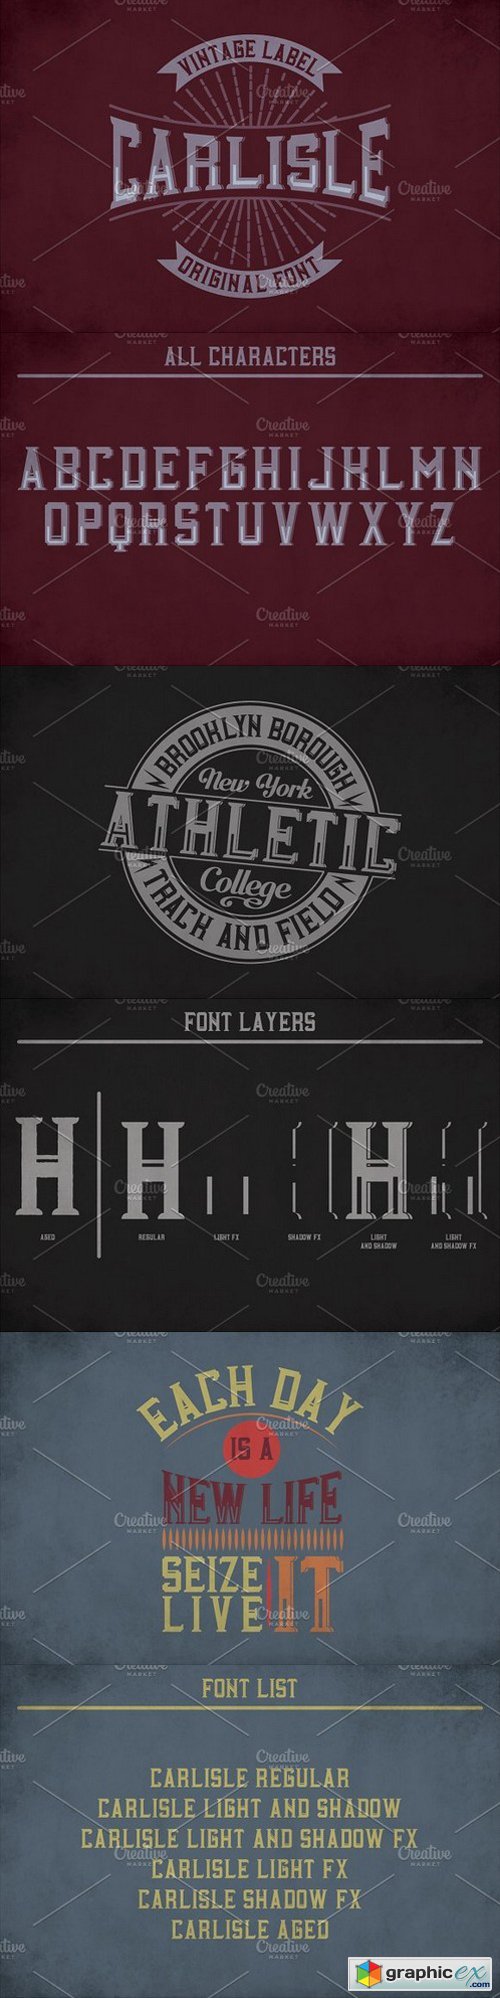 Carlisle Label Typeface